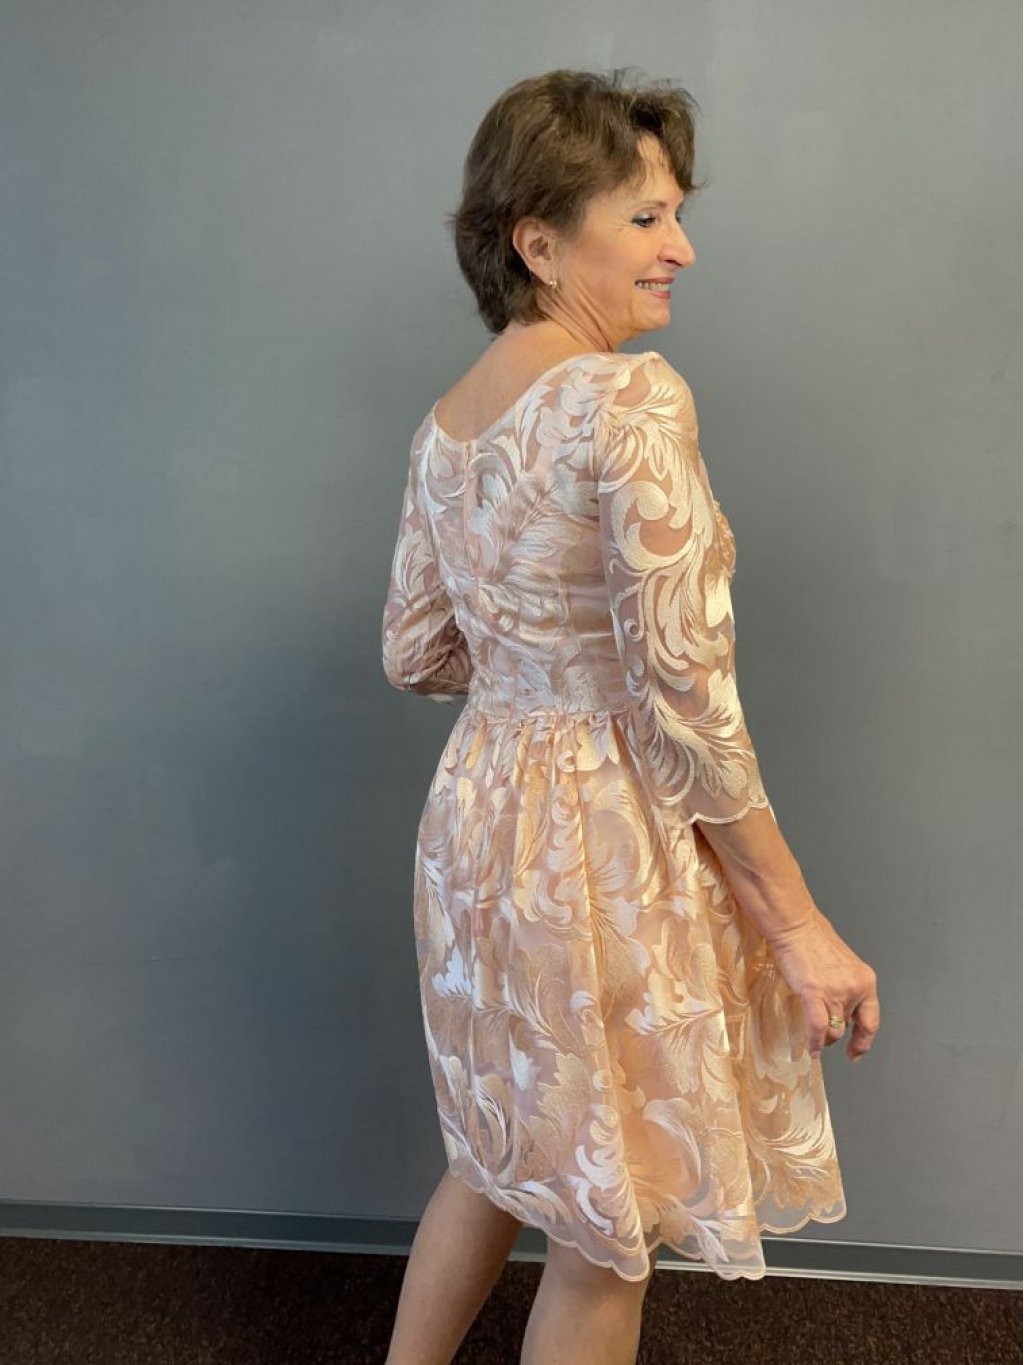 Šaty Marselini1739 růžové krátké krajkové